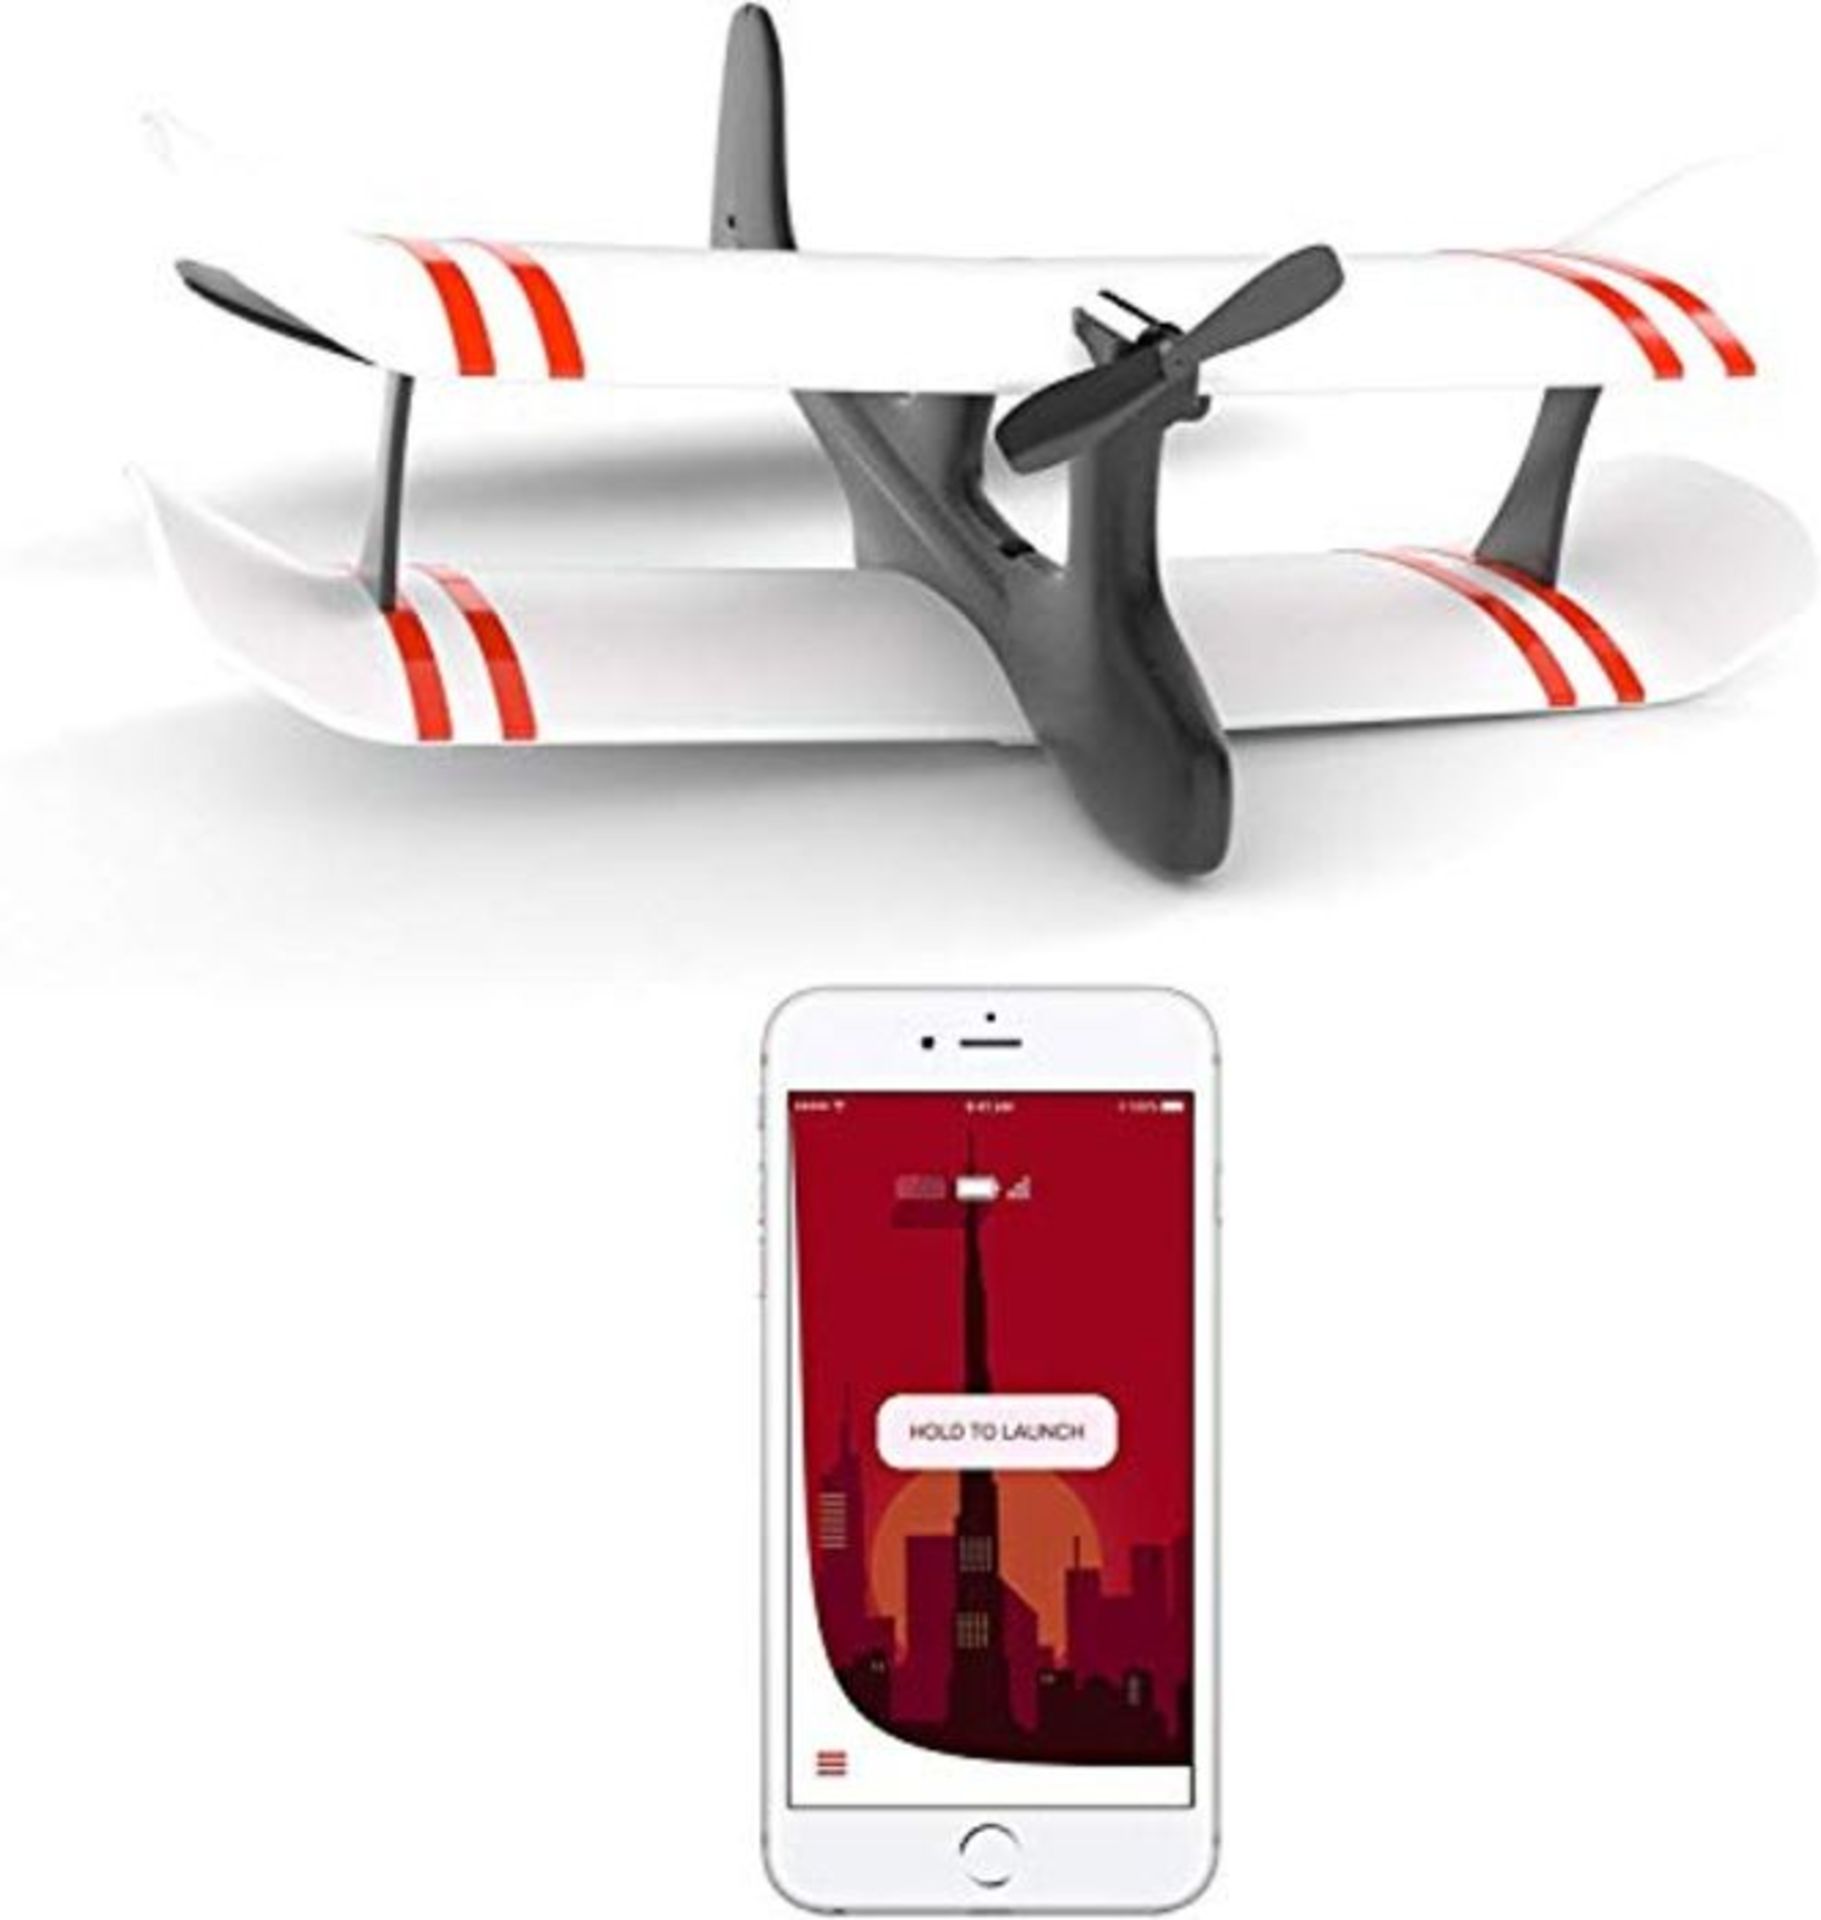 TobyRich SPBL02-016 Moskito Smartphone App Controlled Aero plane - Remote Controlled D